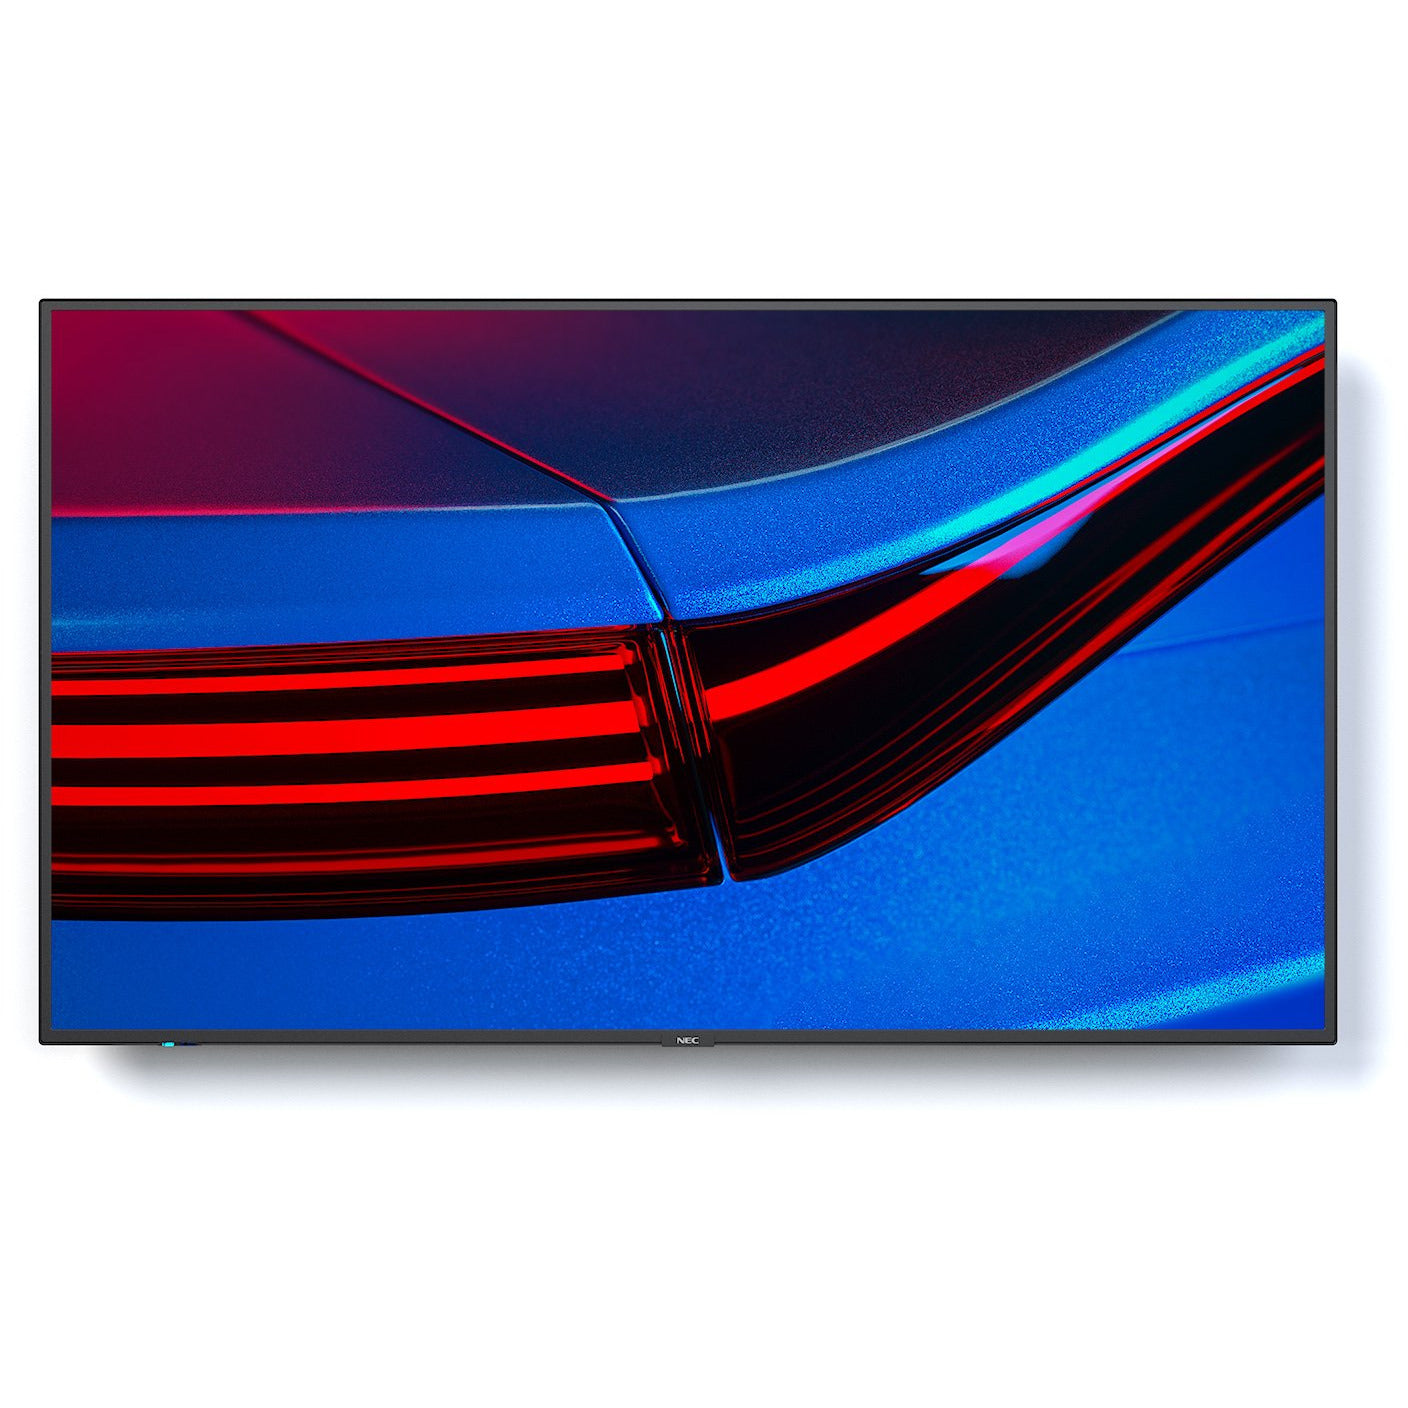 NEC MultiSync® P435 LCD 43" Professional Large Format Display